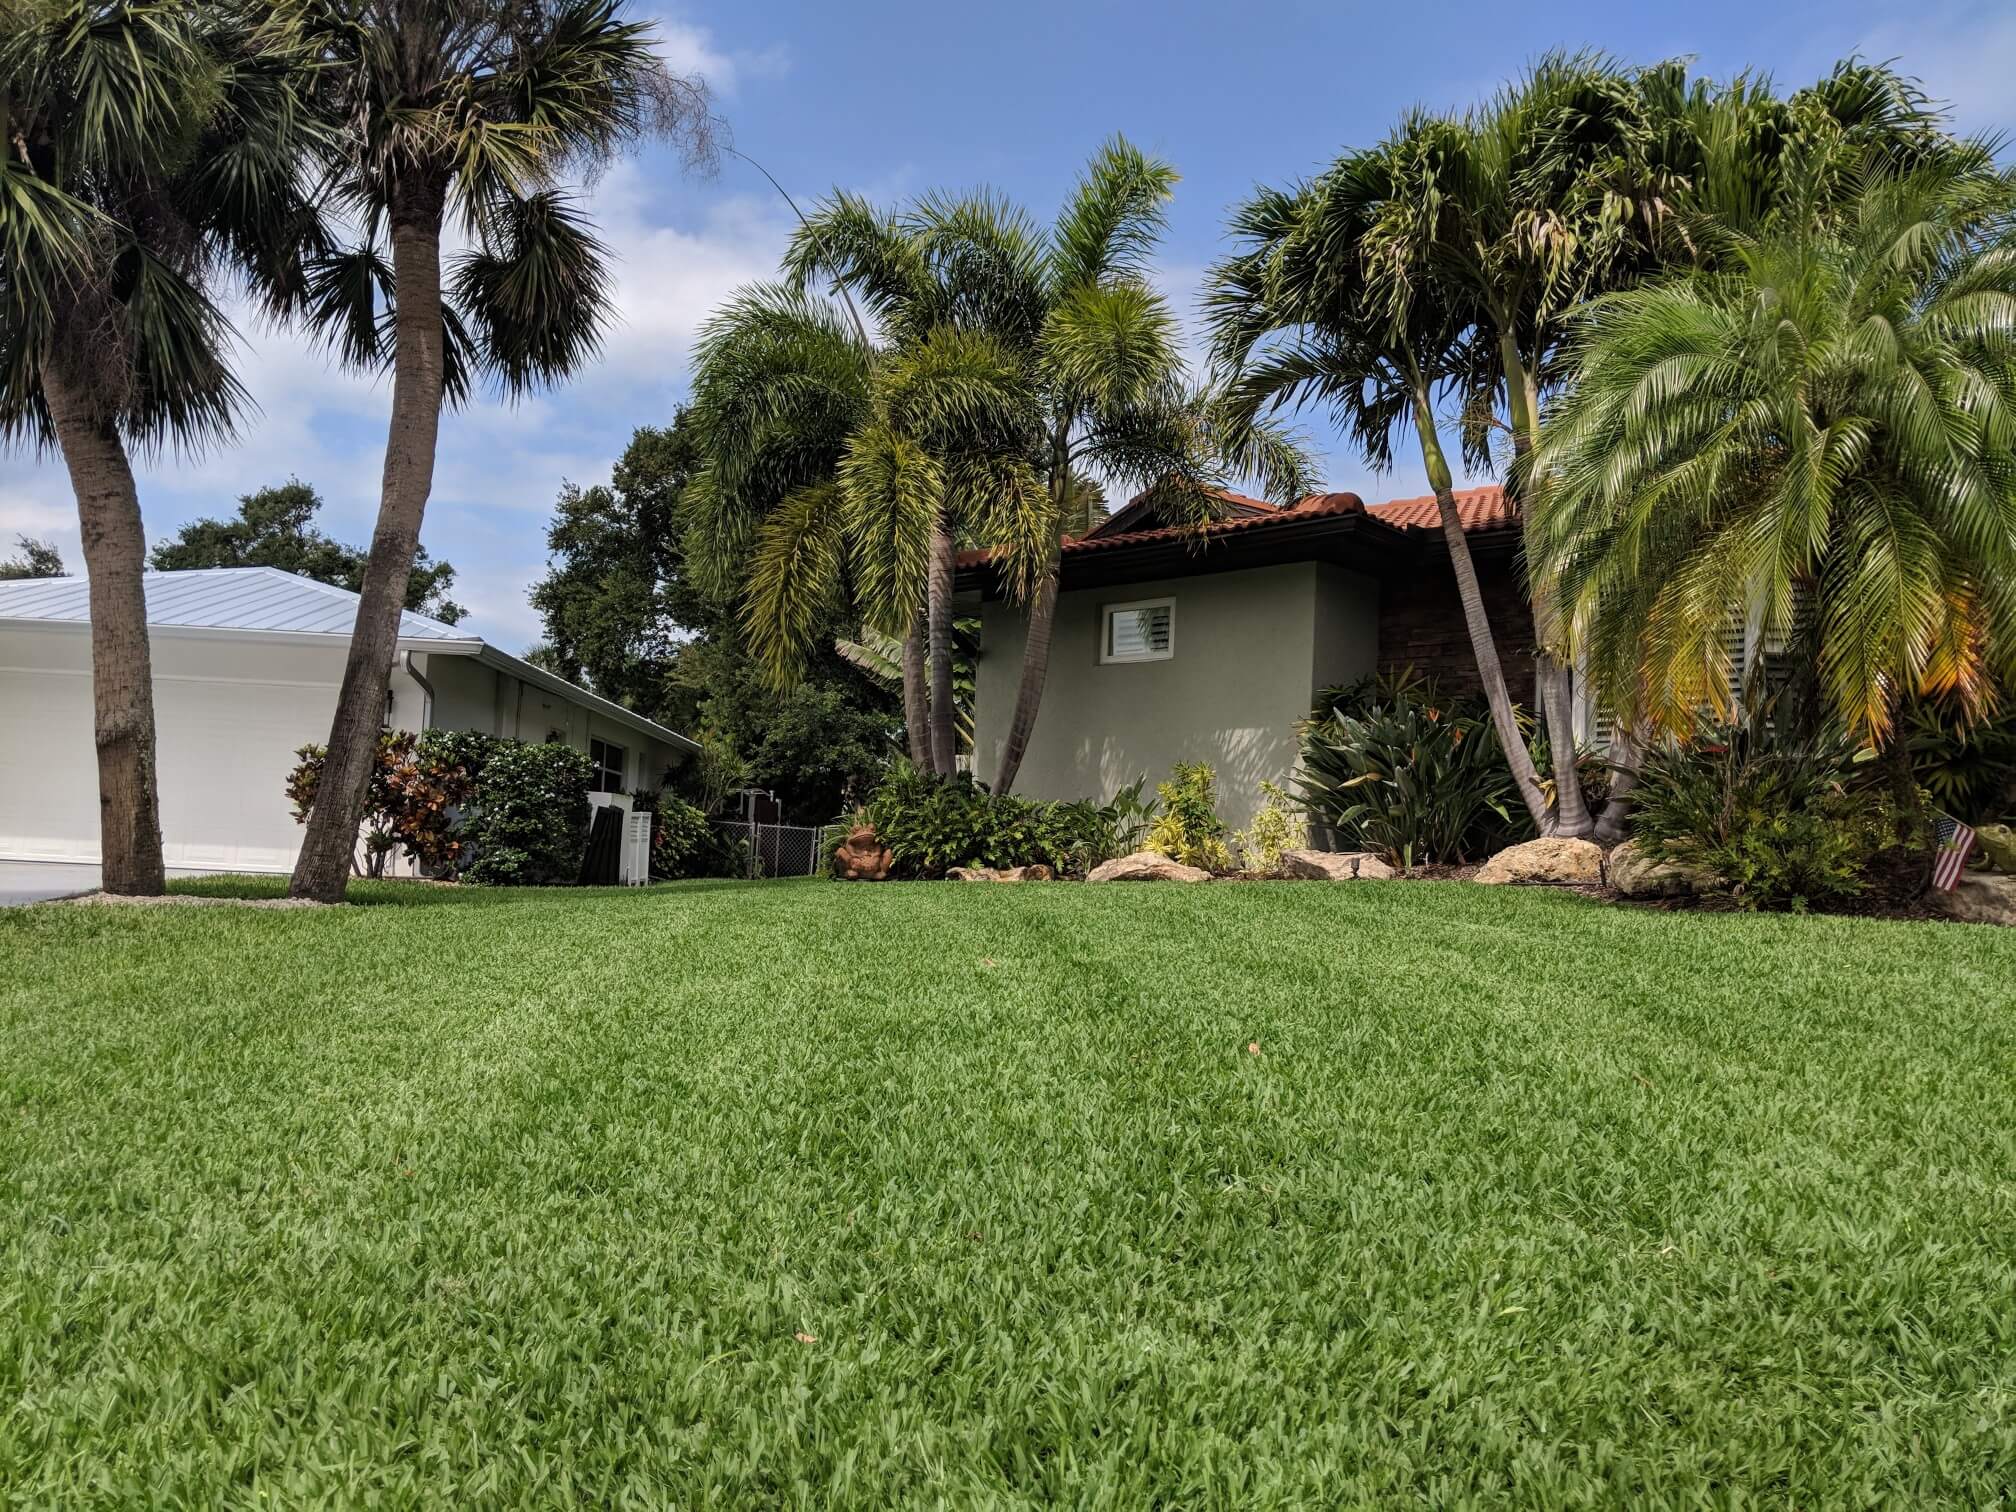 Sarasota’s Lawn Care Basics